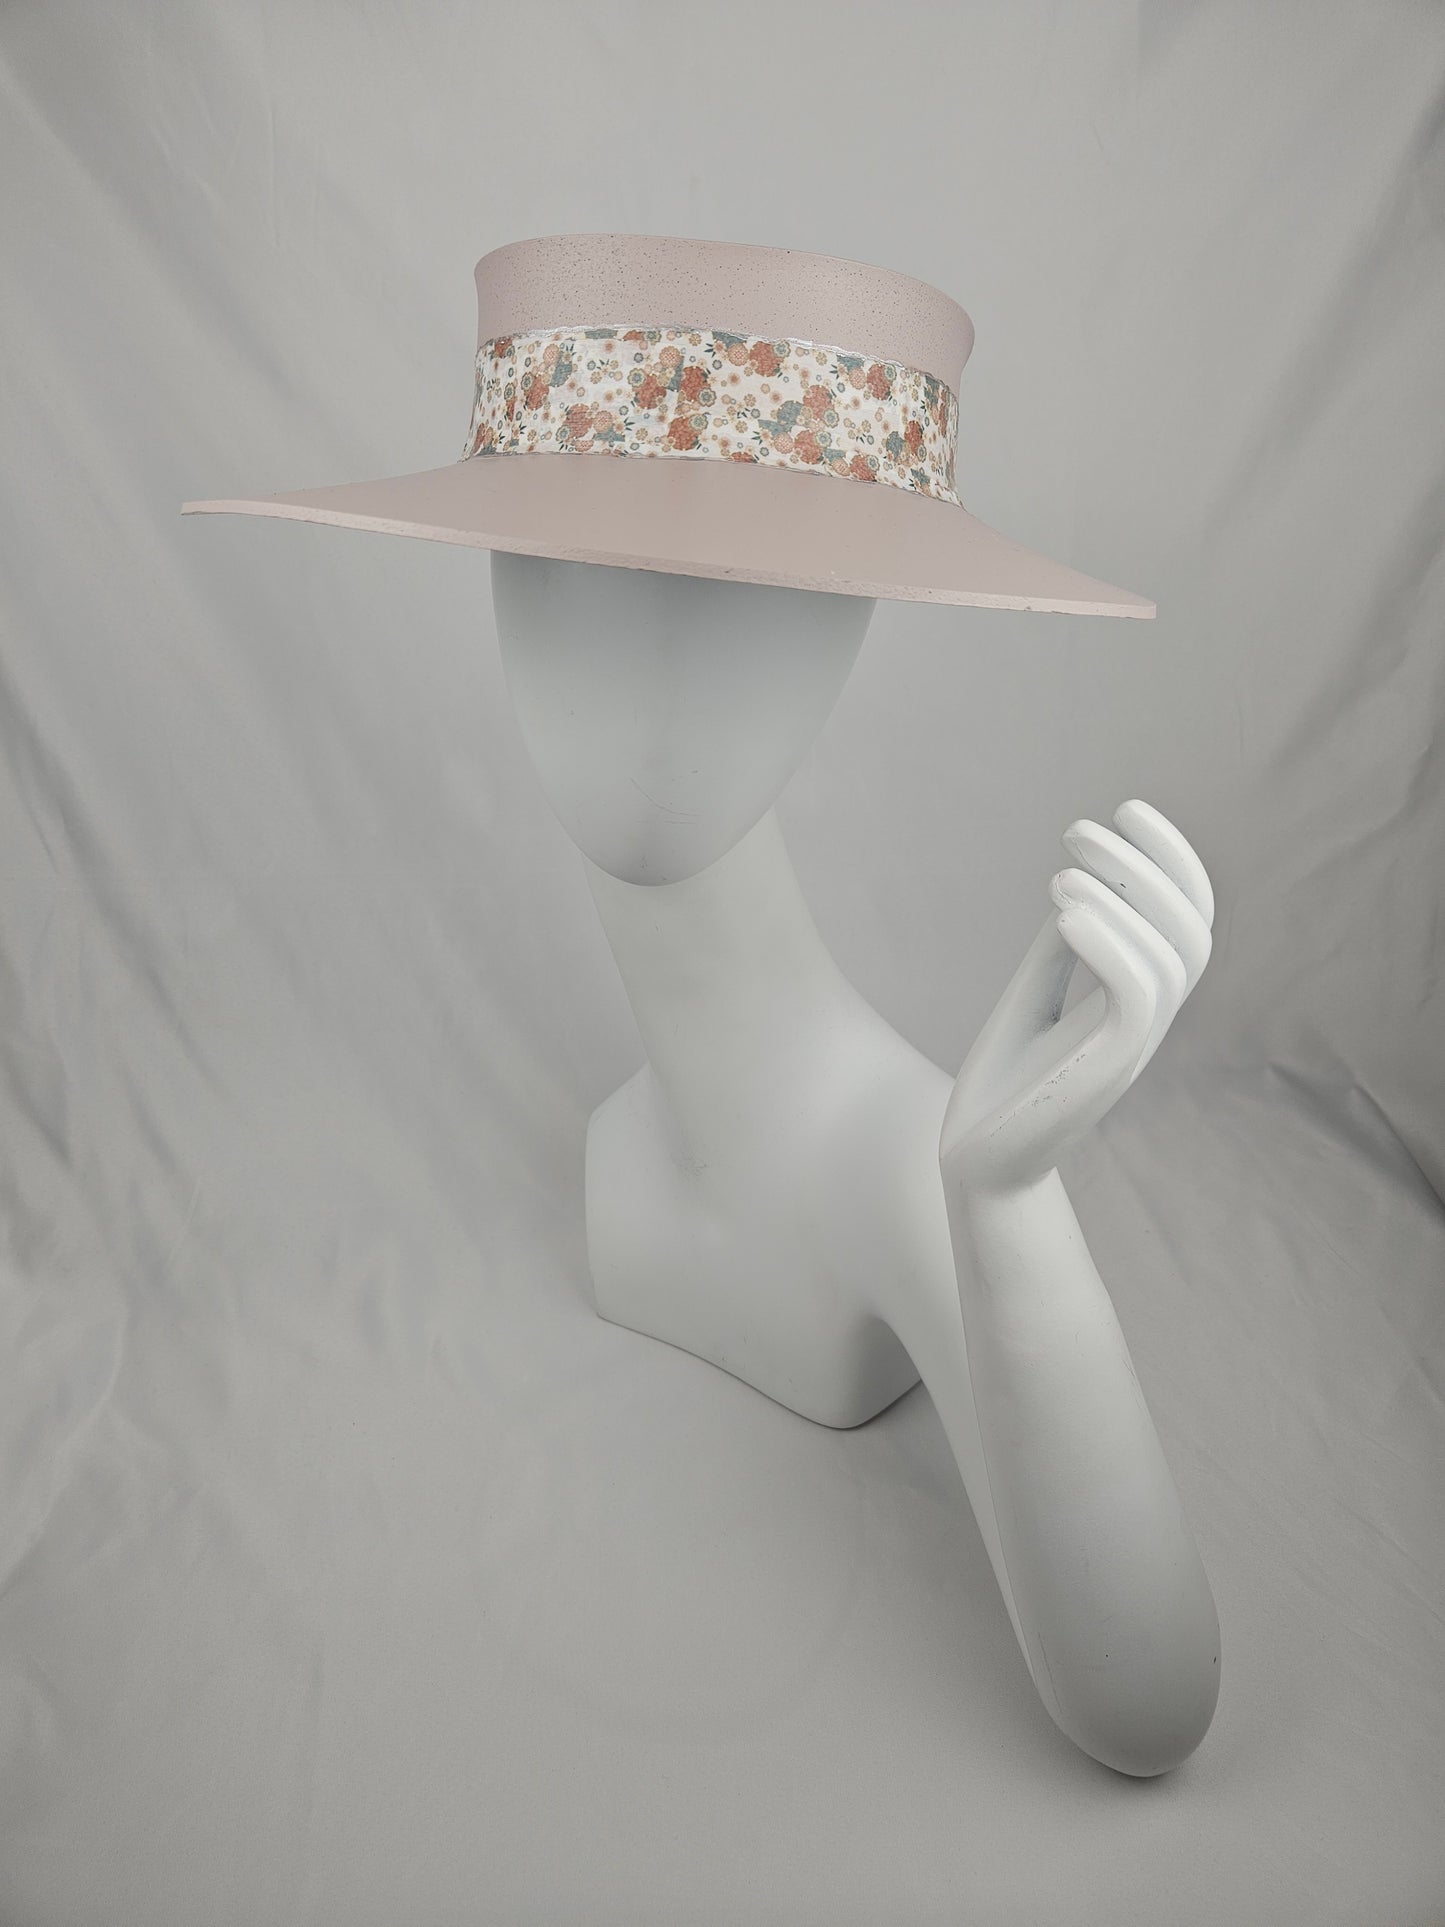 Soft Pink Audrey Sun Visor Hat with Soft Pink Floral Band: 1950s, Walks, Brunch, Asian, Golf, Easter, Church, No Headache, Derby